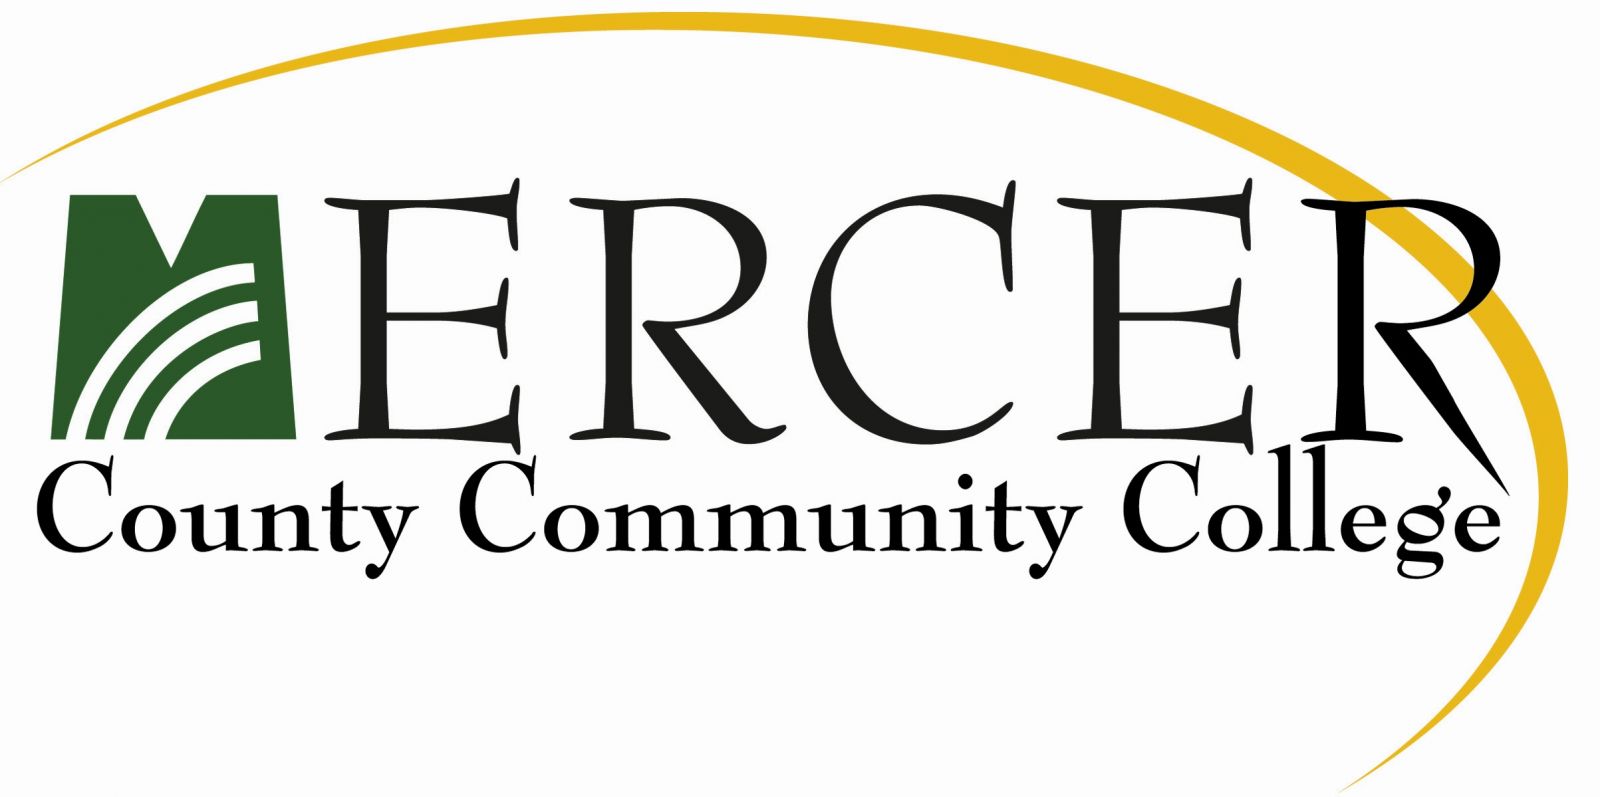 Mercer County Community College (MCCC)